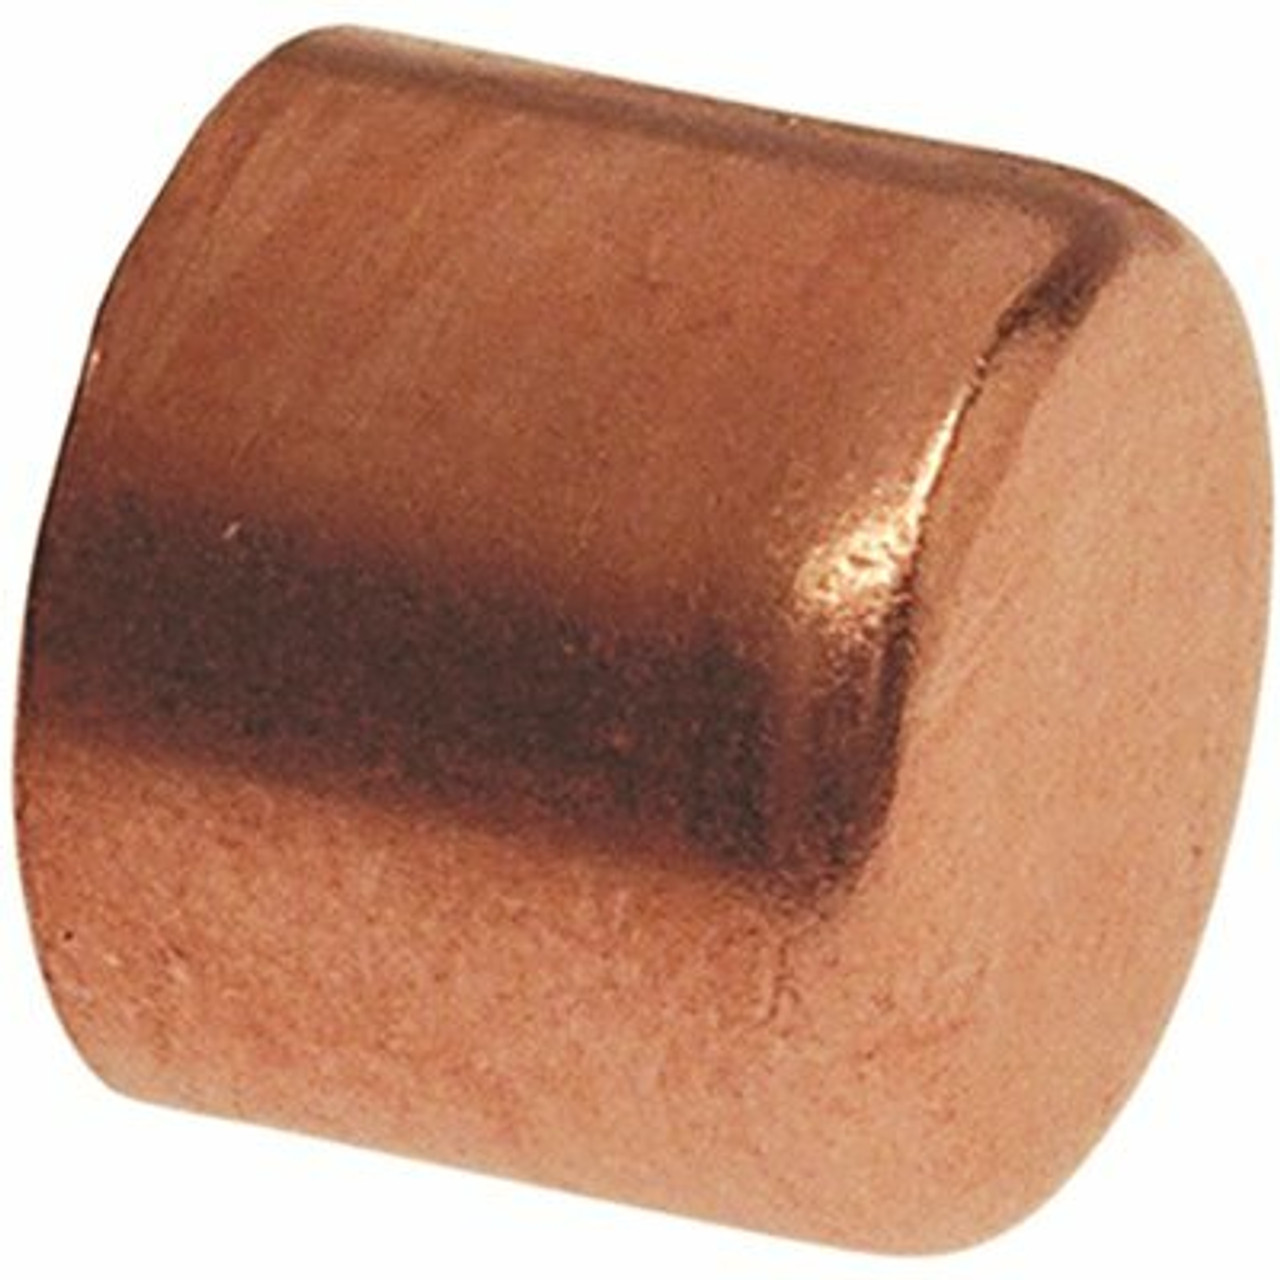 Nibco 1/2 In. Copper Pressure Tube Cap Fitting